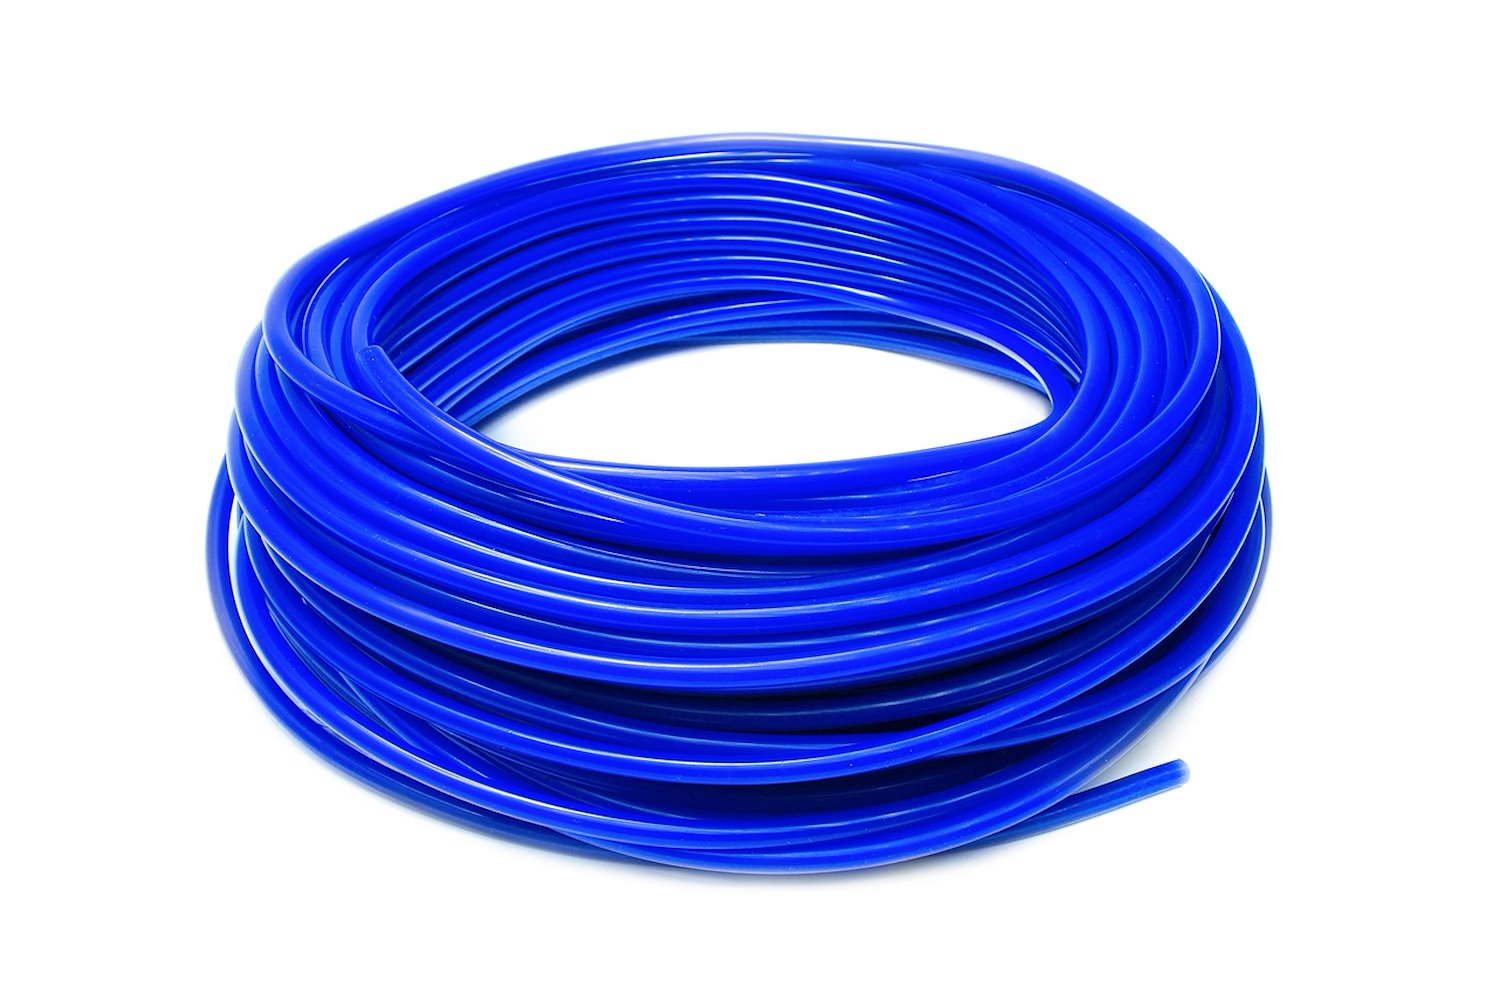 HTSVH95-BLUEx100 High-Temperature Silicone Vacuum Hose Tubing, 3/8 in. ID, 100 ft. Roll, Blue